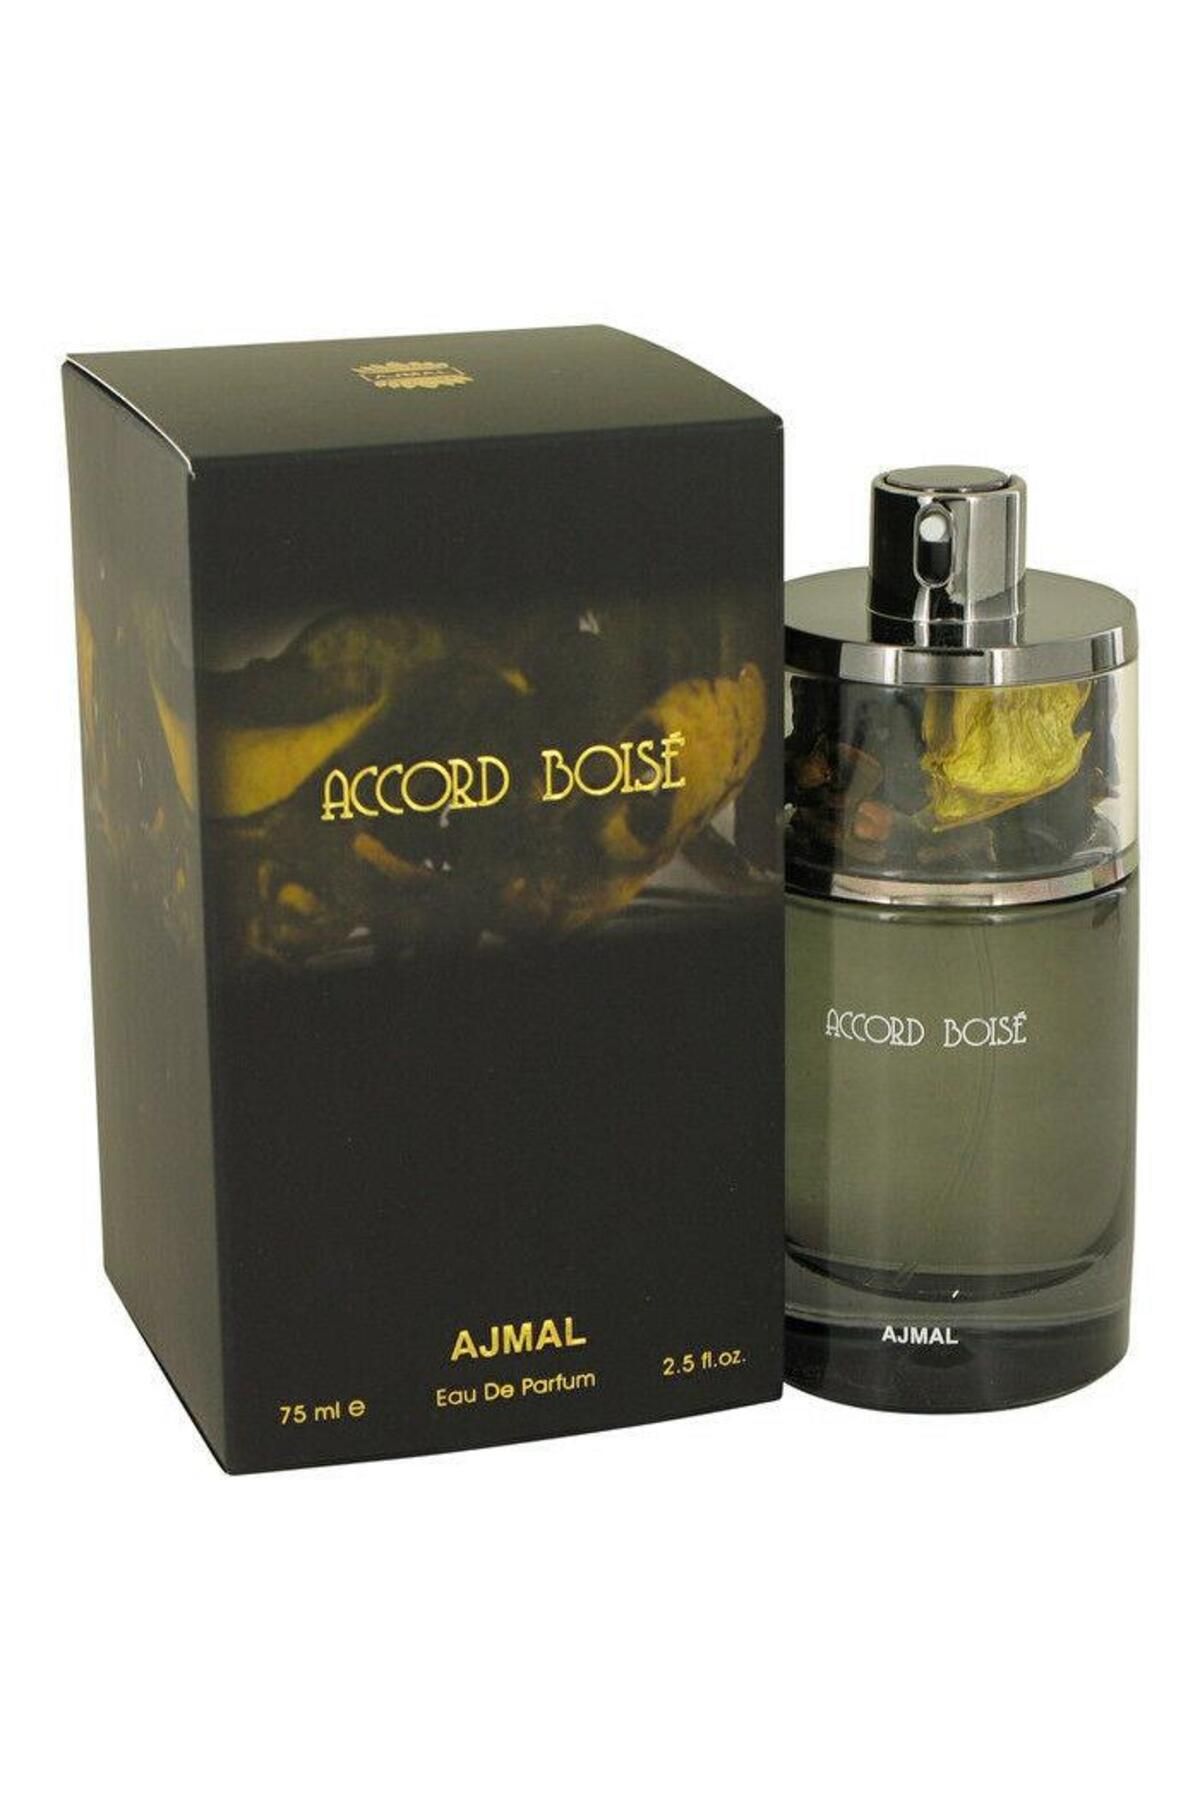 Ajmal Accord Boıse Eau De Parfum 75 ml